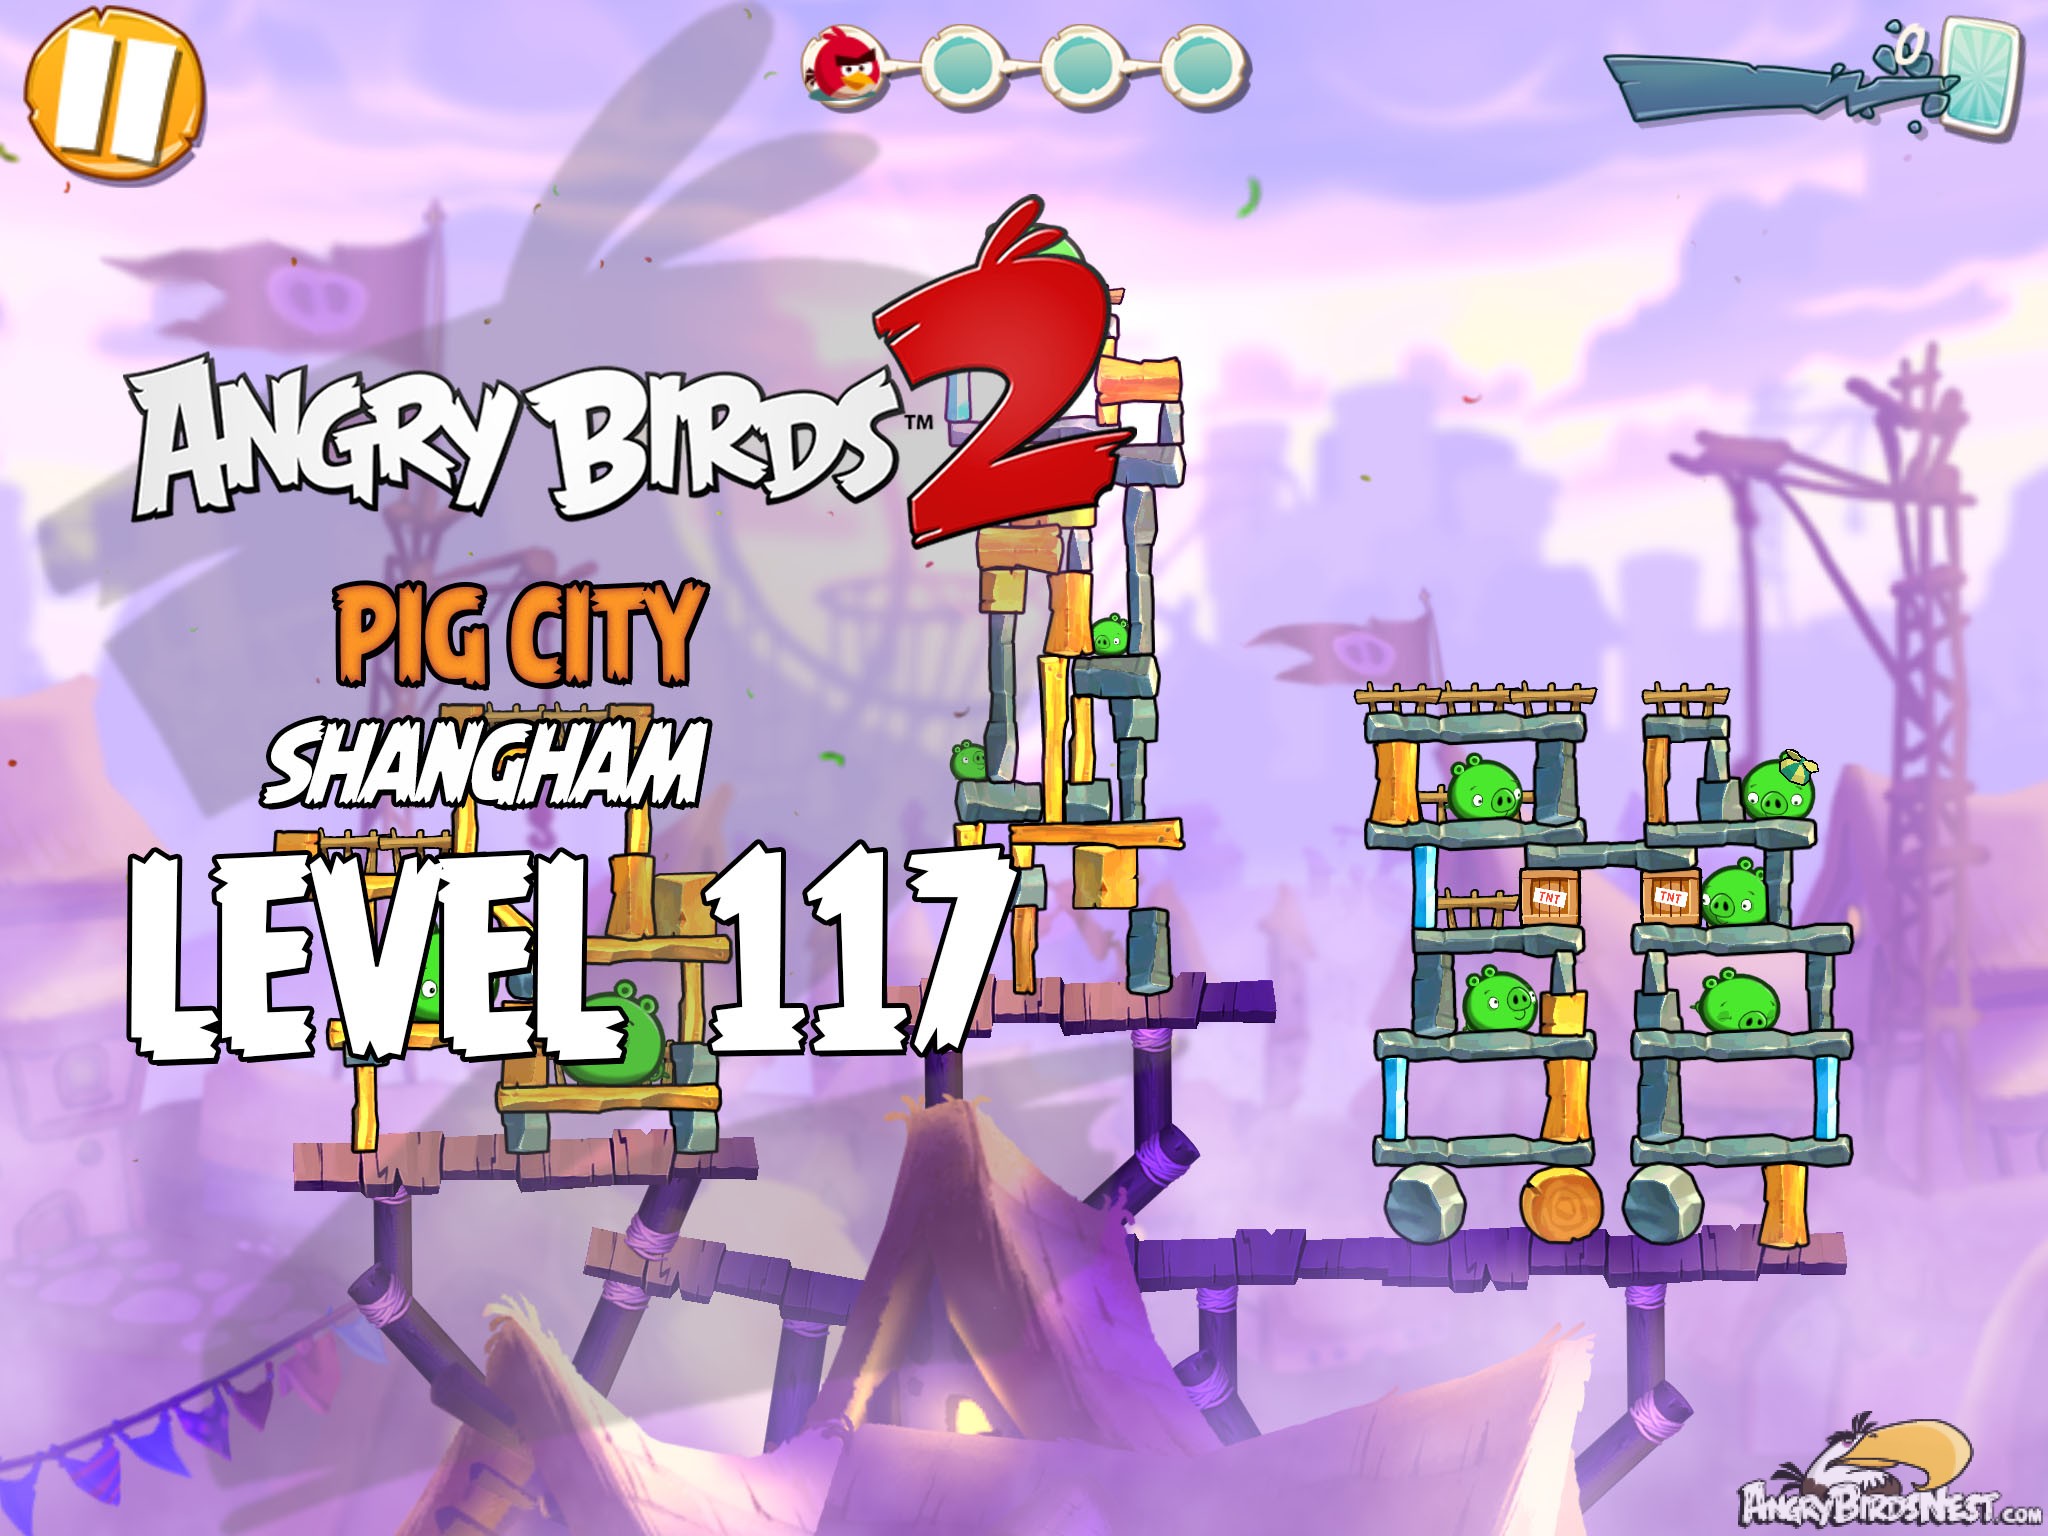 Angry Birds 2 Pig City Shangham Level 117